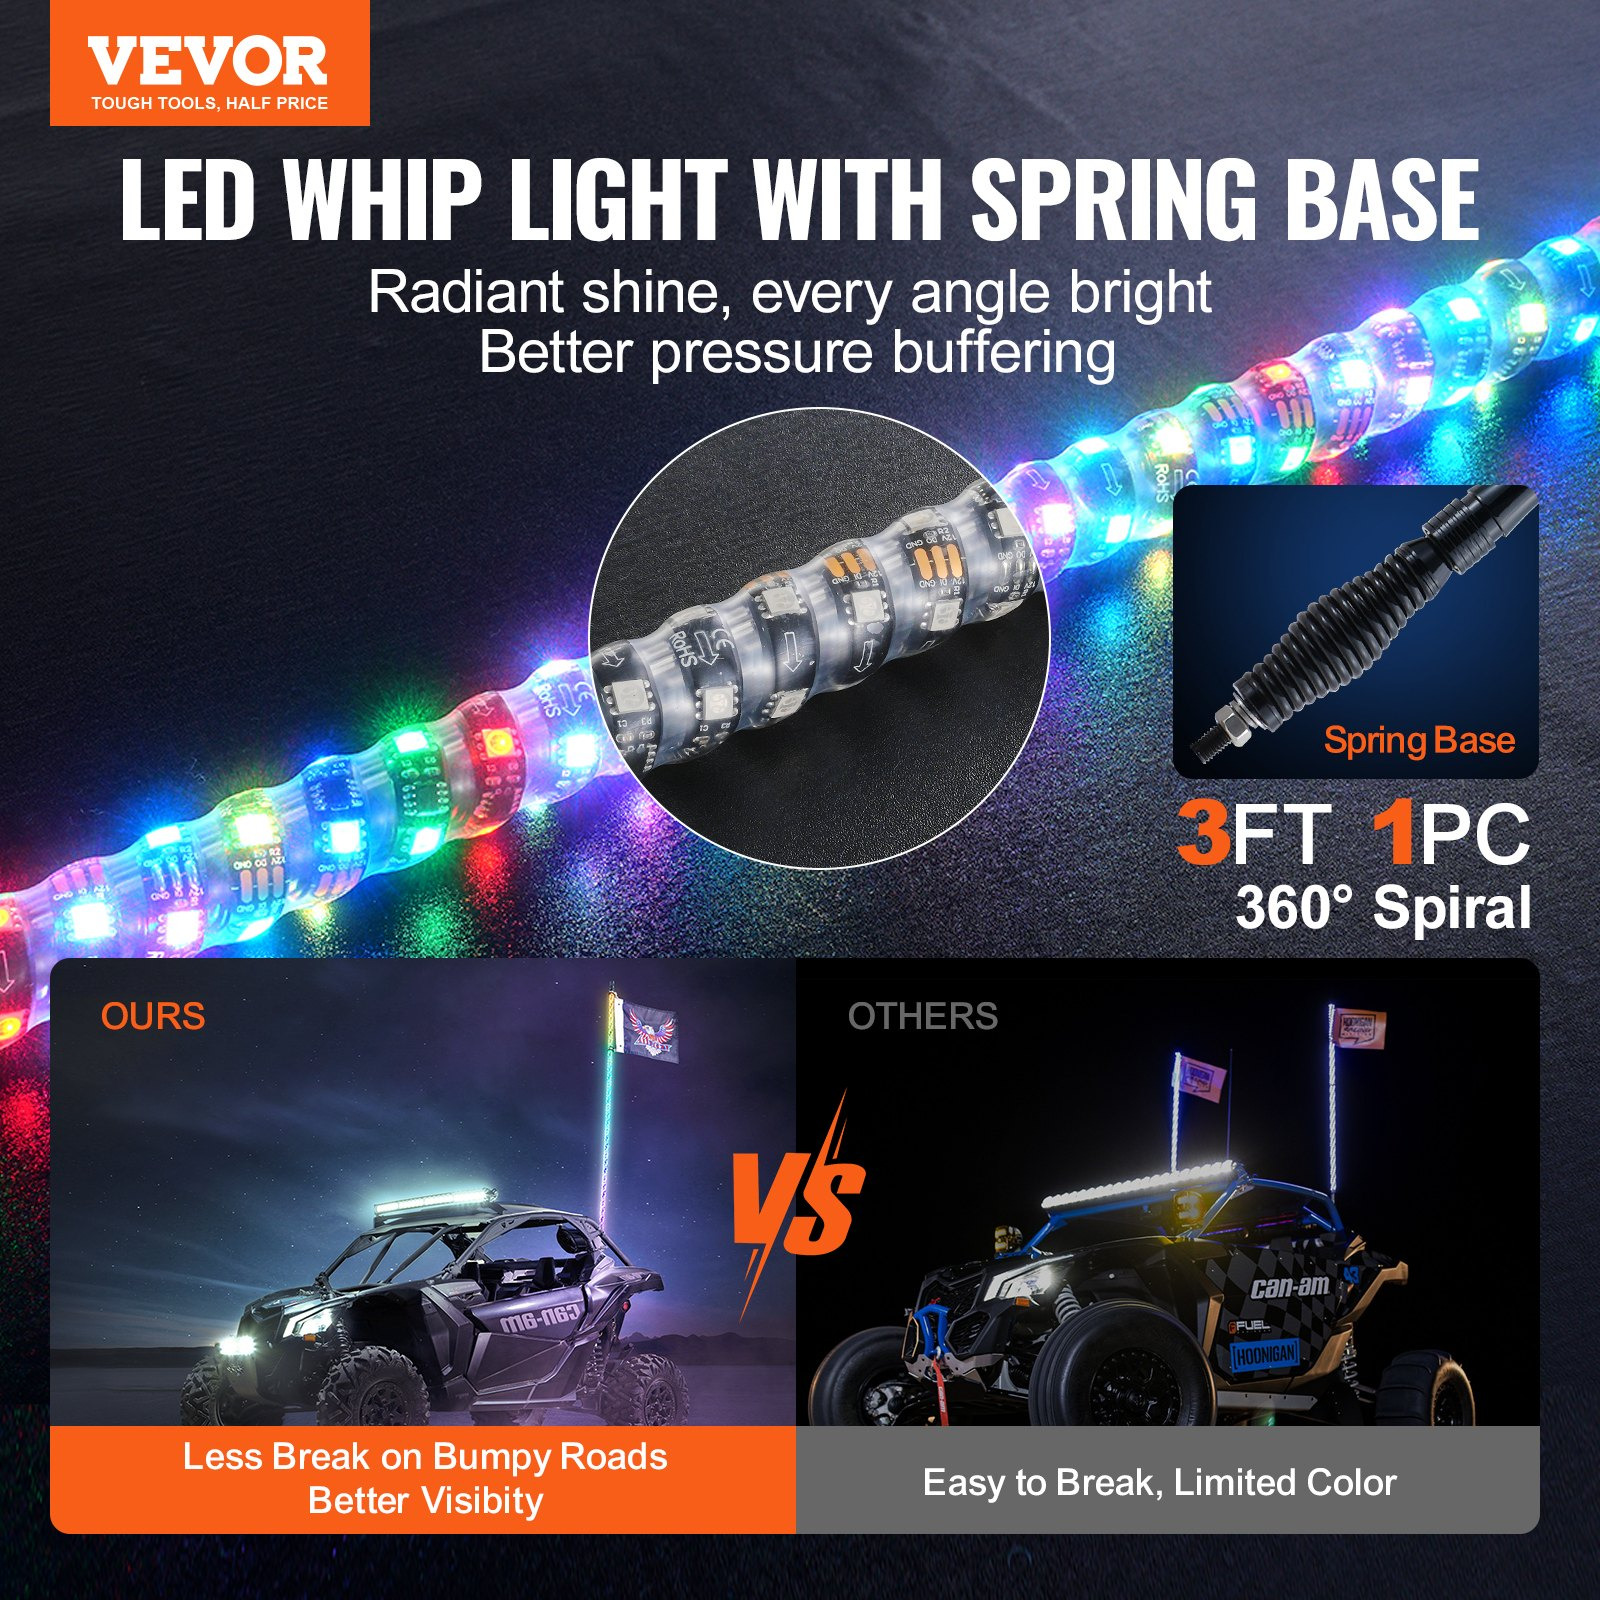 VEVOR 1 PC 3 FT Whip Light with Spring Base, Led Whip Light with APP & Remote Co